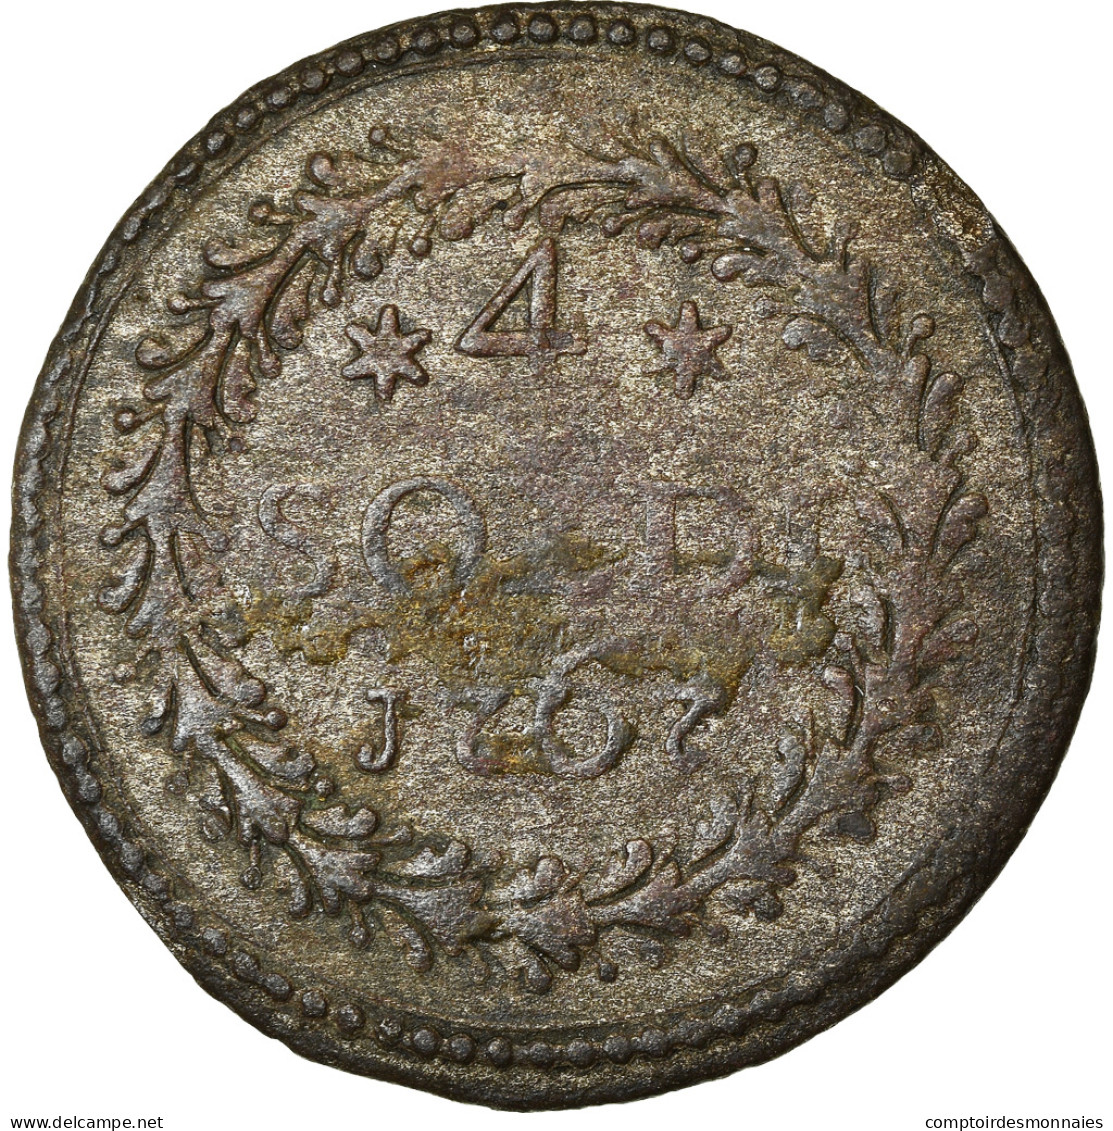 Monnaie, États Italiens, CORSICA, General Pasquale Paoli, 4 Soldi, 1767 - Korsika (1736-1768)